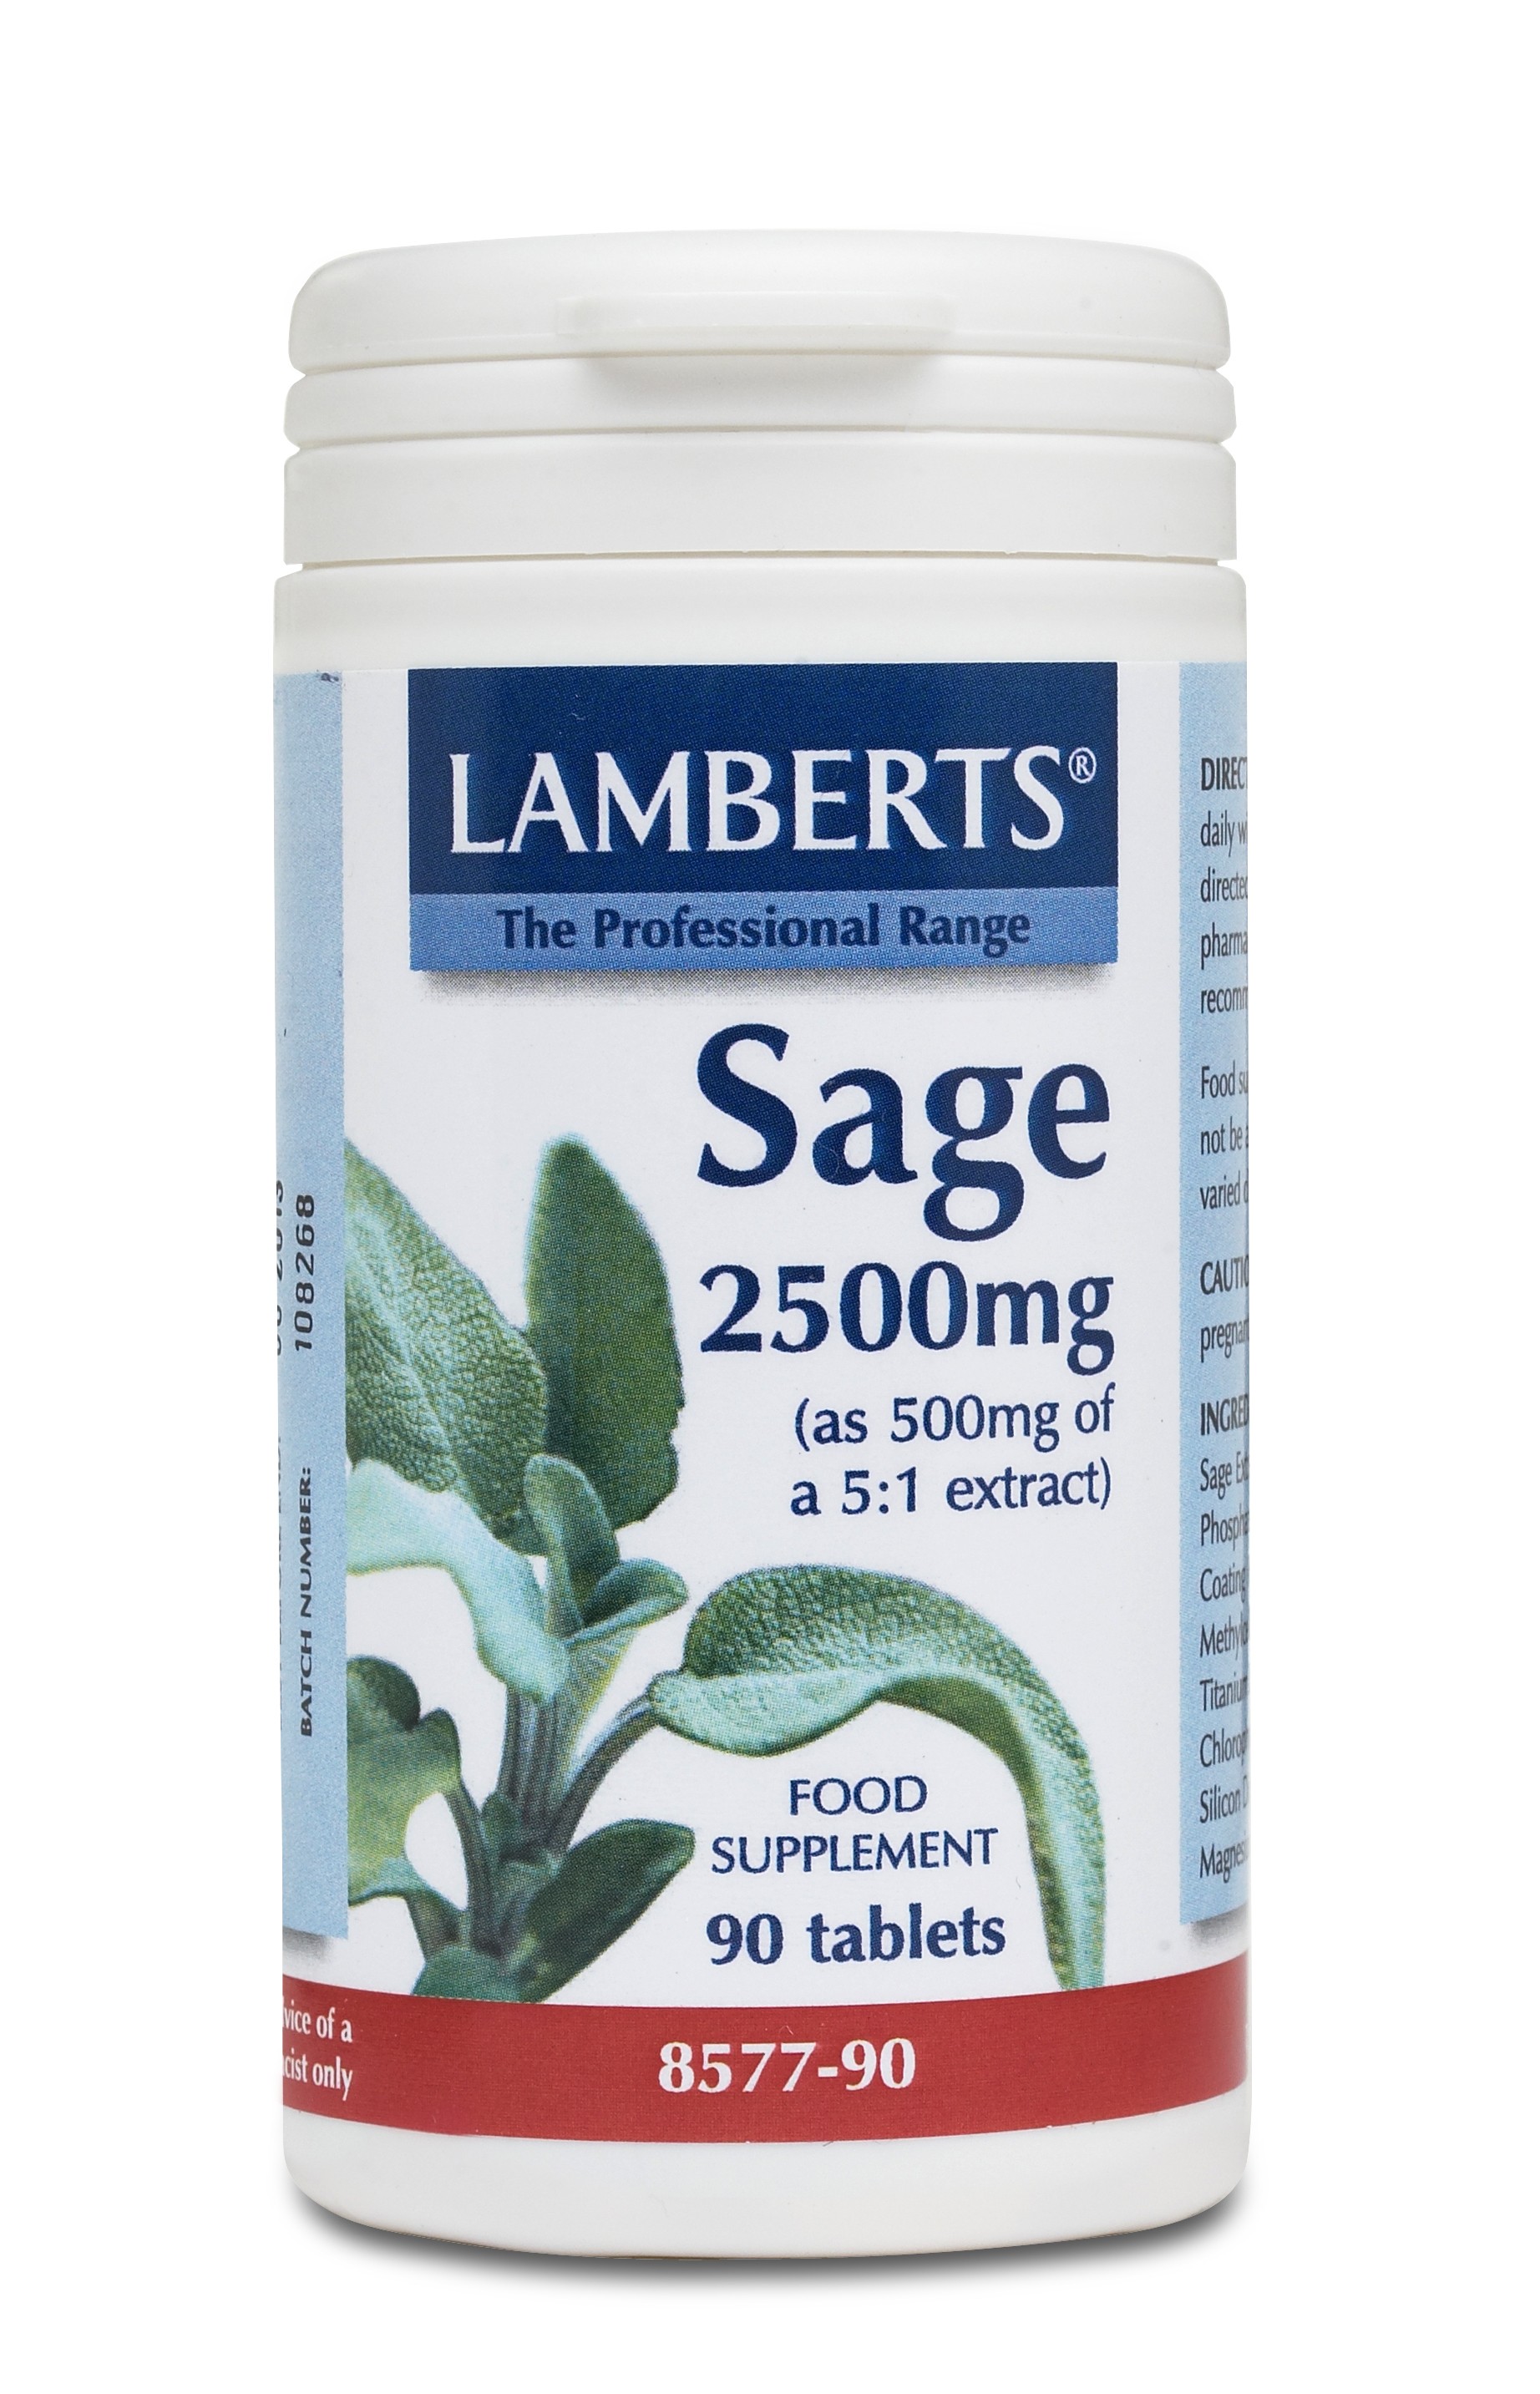 Lamberts Sage 2500mg (2.5% Rosmarinic Acid)